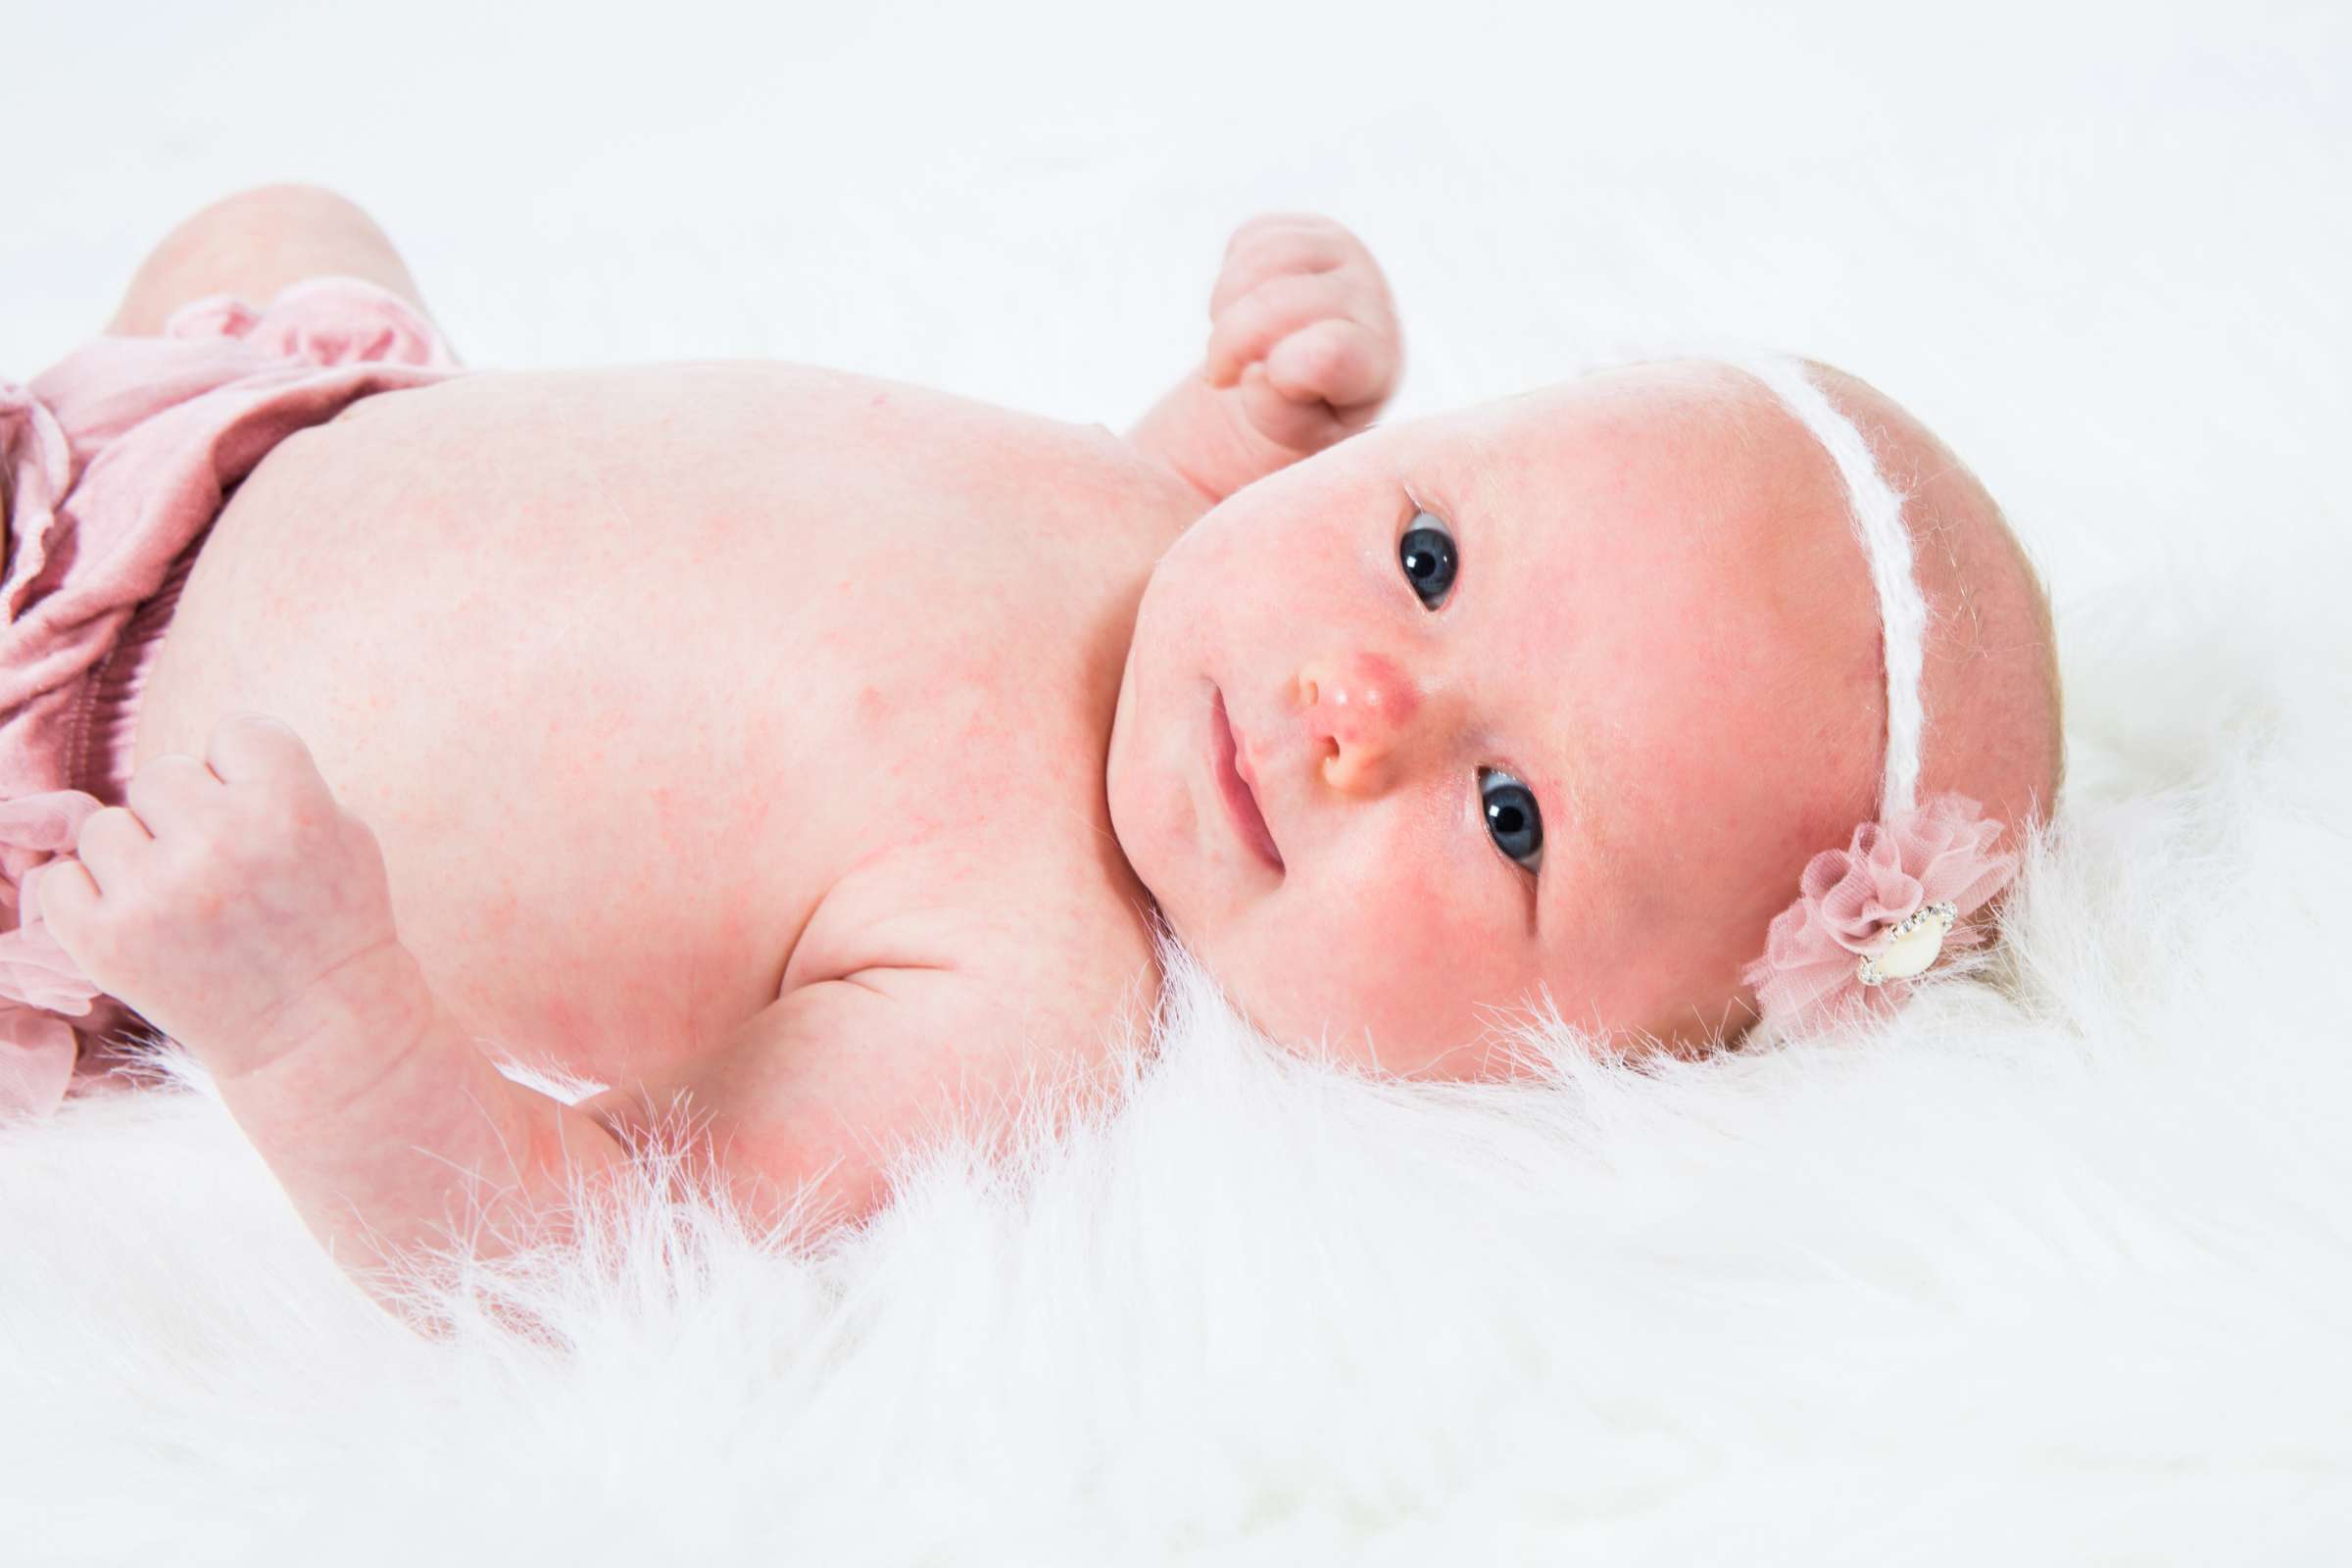 Newborn Photo Session, Jacqueline and Dallas Newborn Photo #6 by True Photography